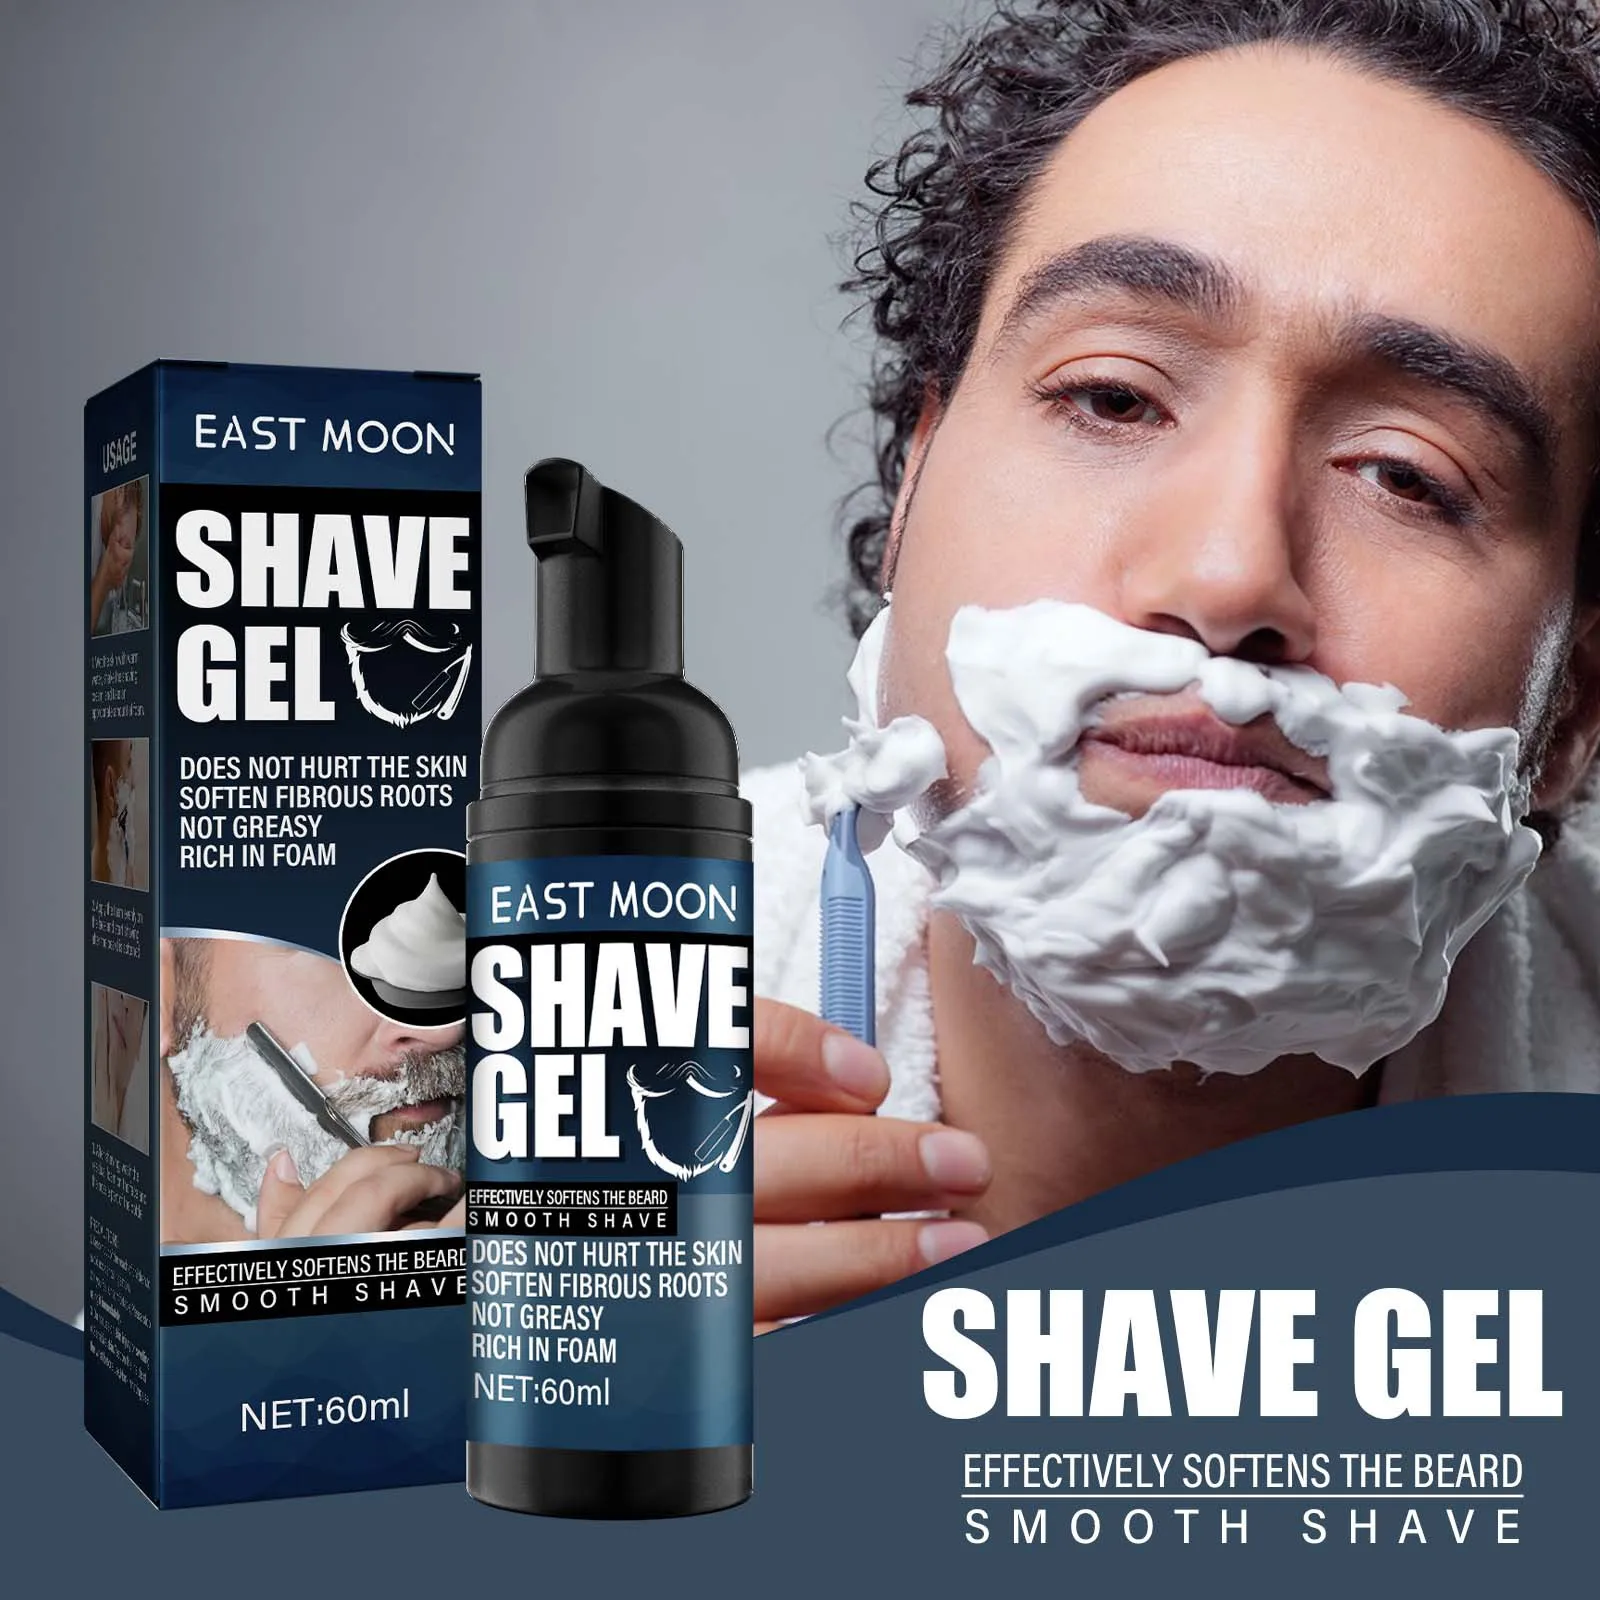 

60 мл крем для бритья высокого объема пена для бритья для мужчин мягкий освежающий крем для бритья и смягчения бороды